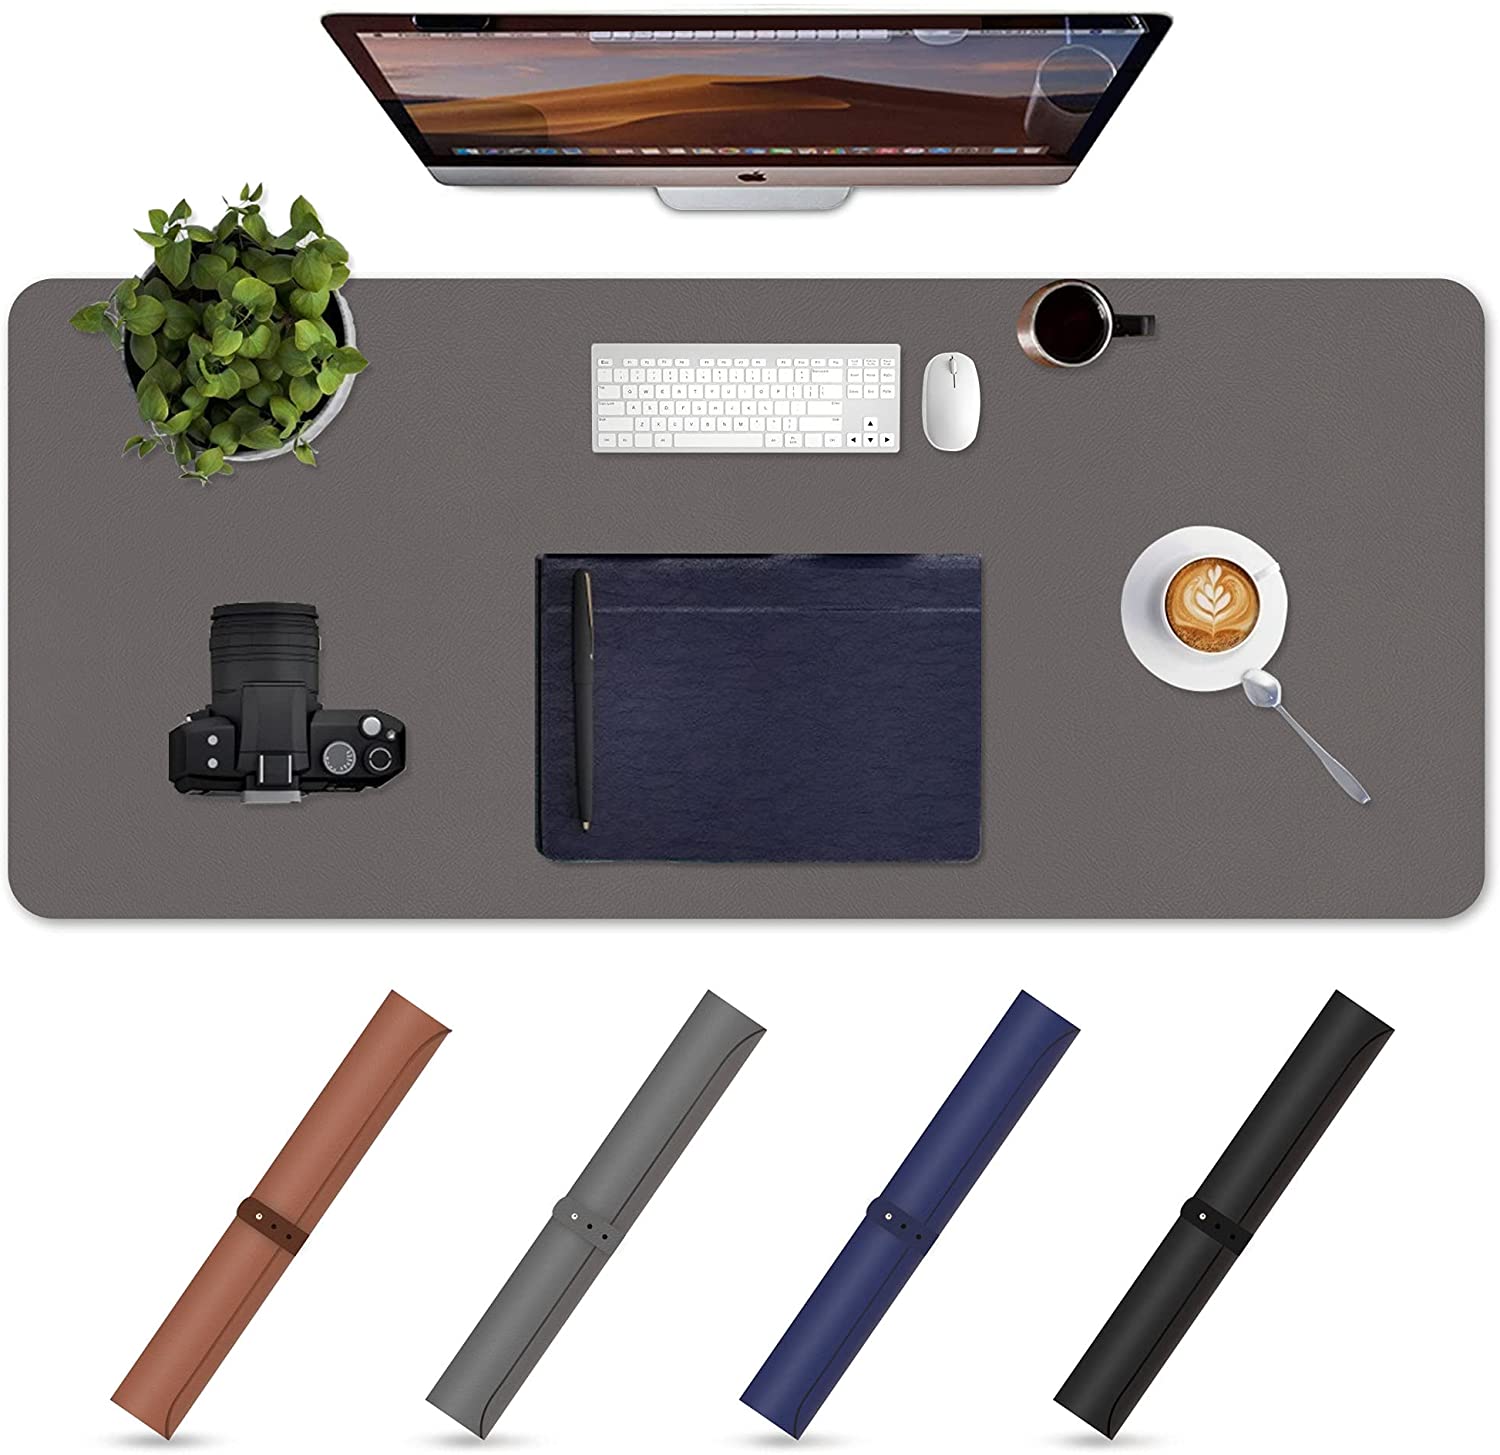 Buy Leeonz Desk Pad, Large Mouse Pad, Office Desk Mat, PU Leather